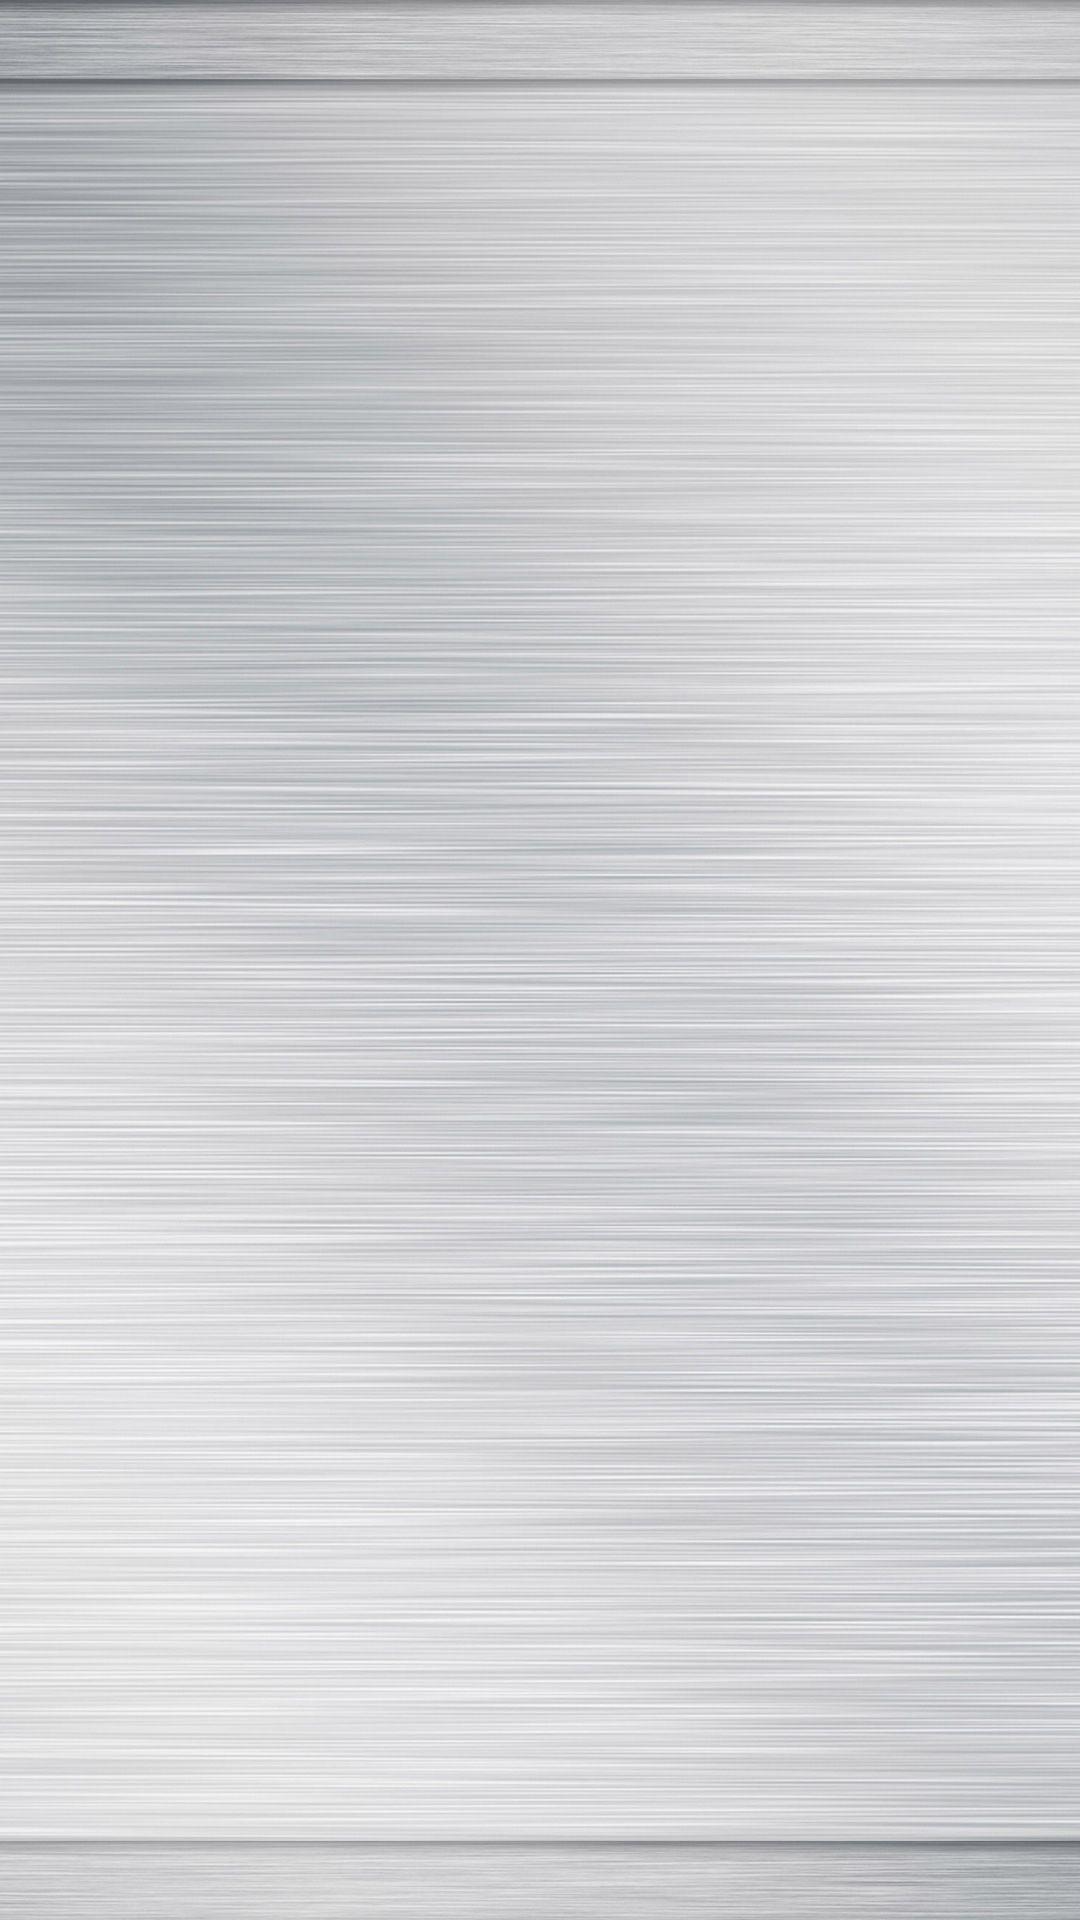 Brushed Aluminium Horizontal Texture Cool Android Wallpaper free